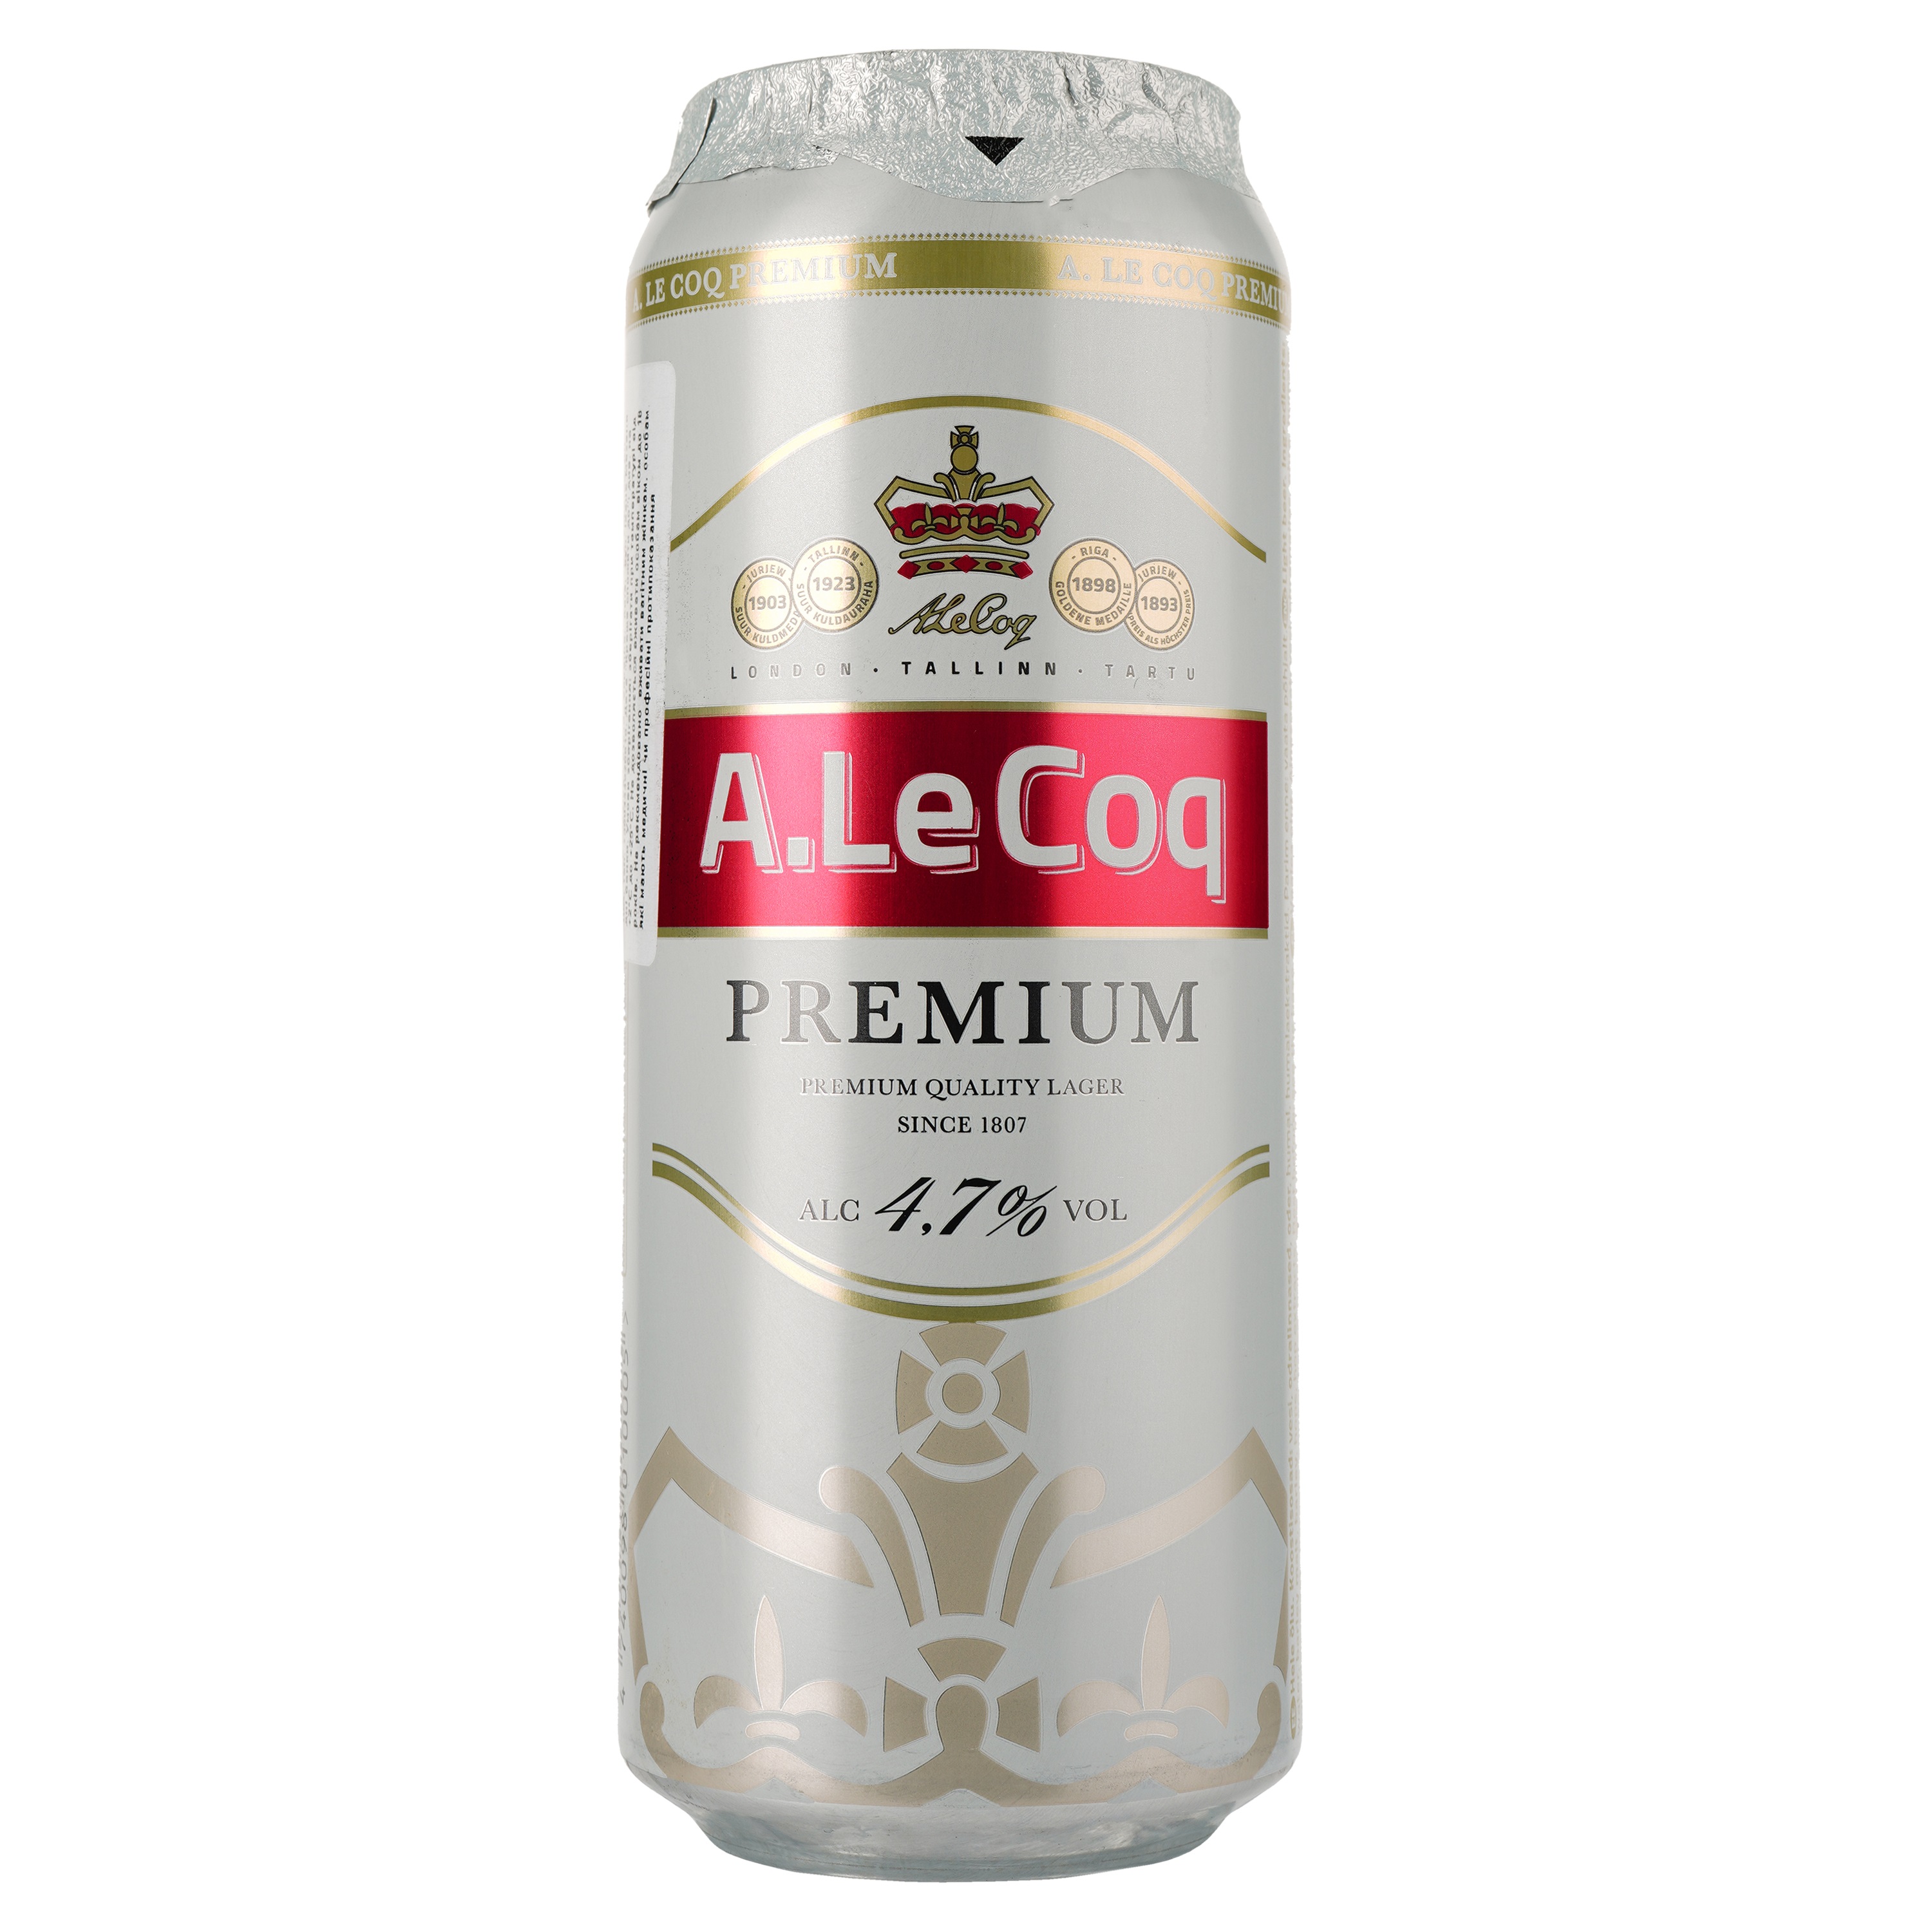 Пиво A. Le Coq Premium, светлое, фильтрованное, 4,7%, ж/б, 0,5 л - фото 1